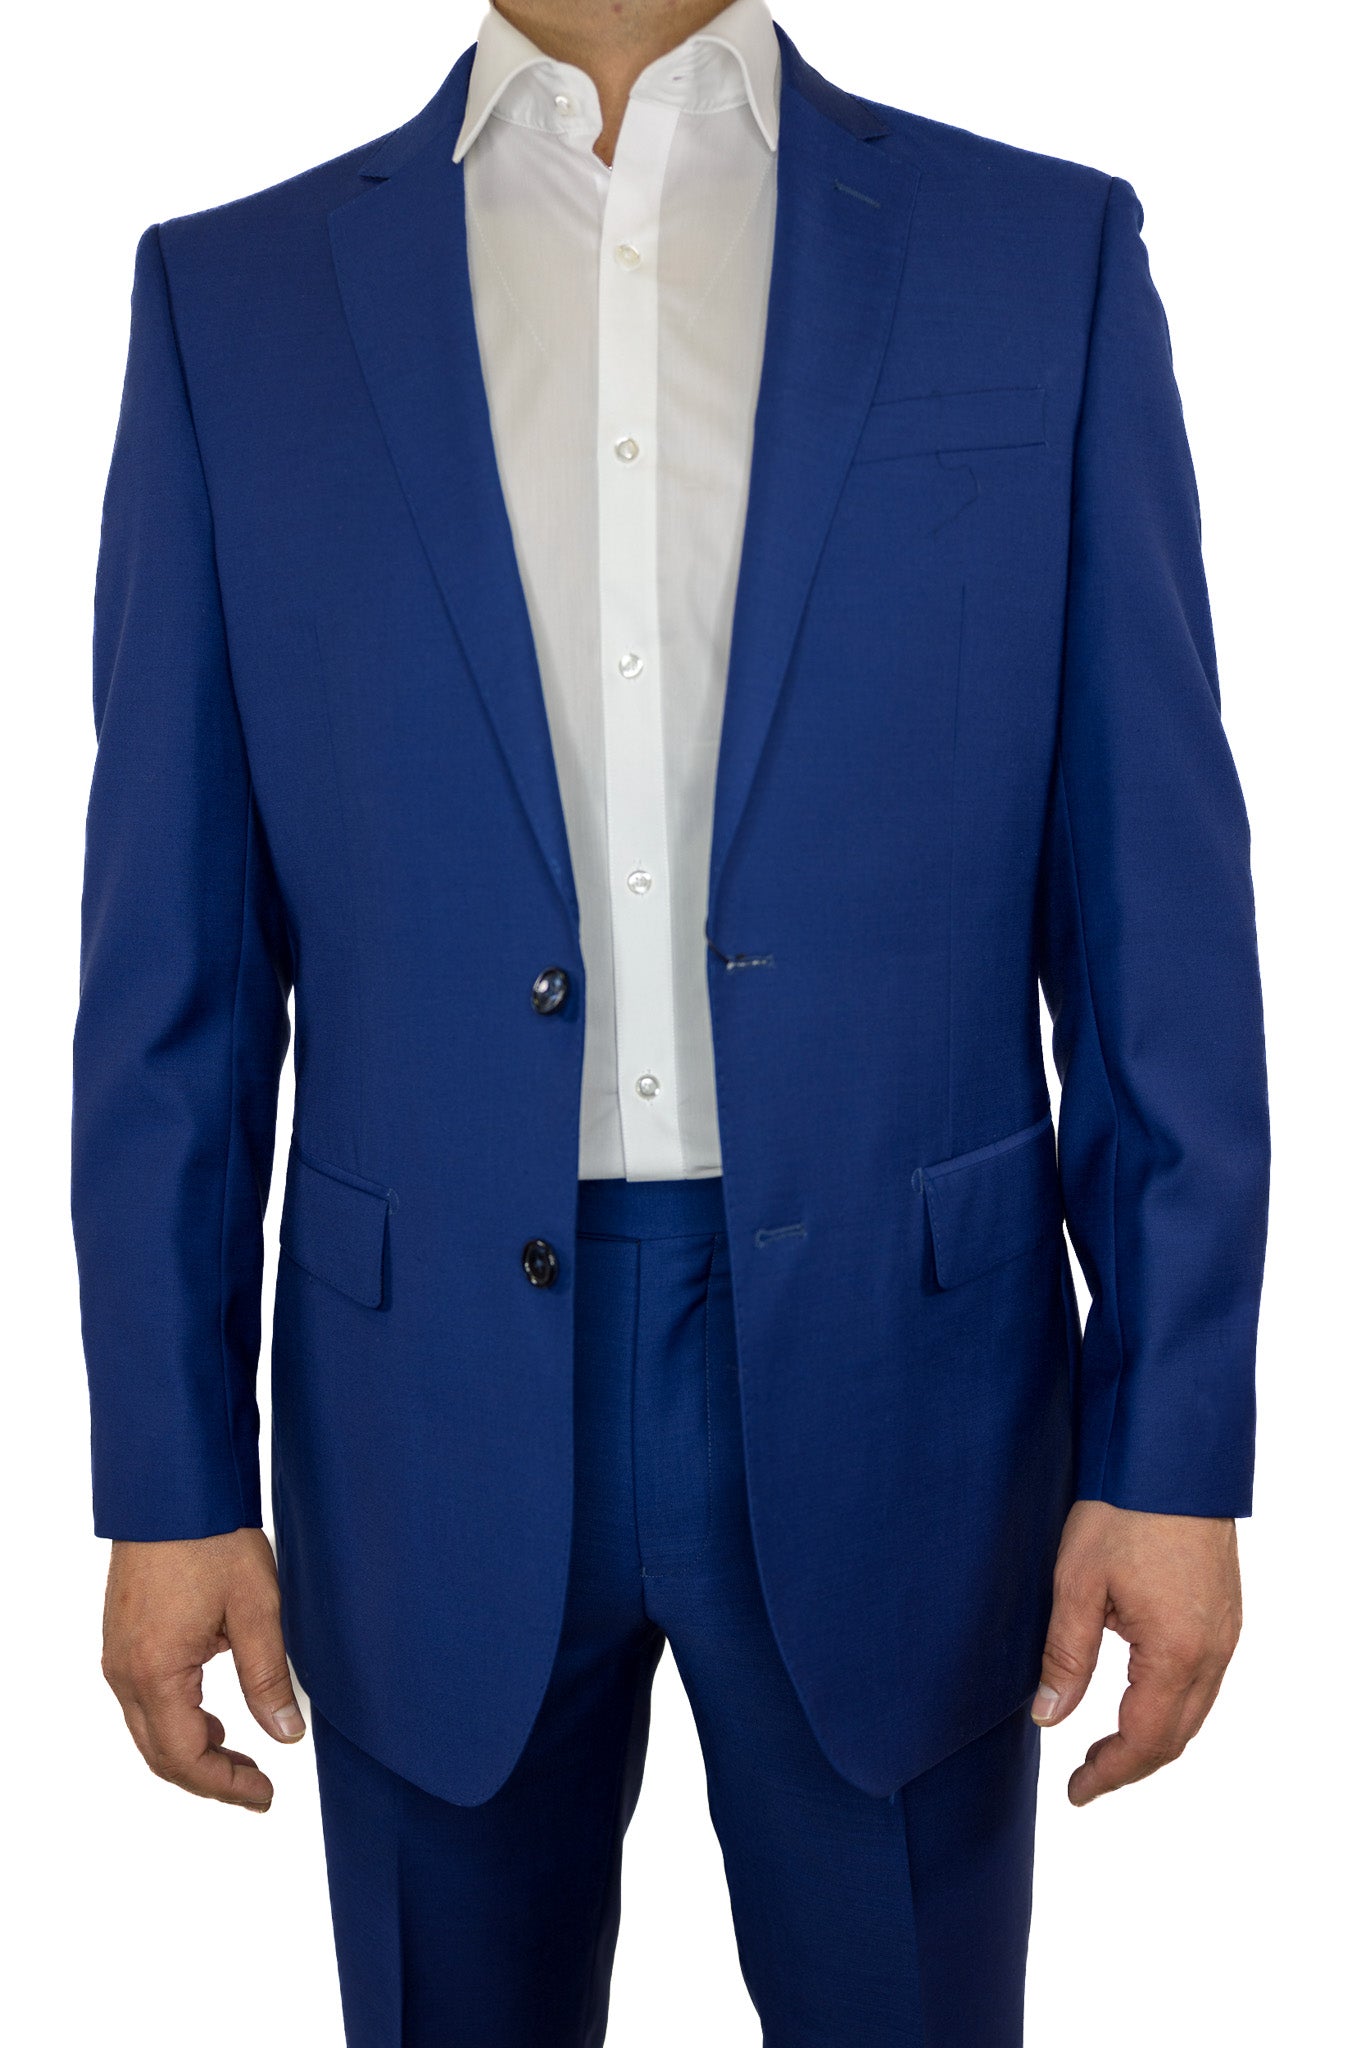 Tiglio Lux Slim Fit Suit French Blue – Ticknors Men's Clothiers